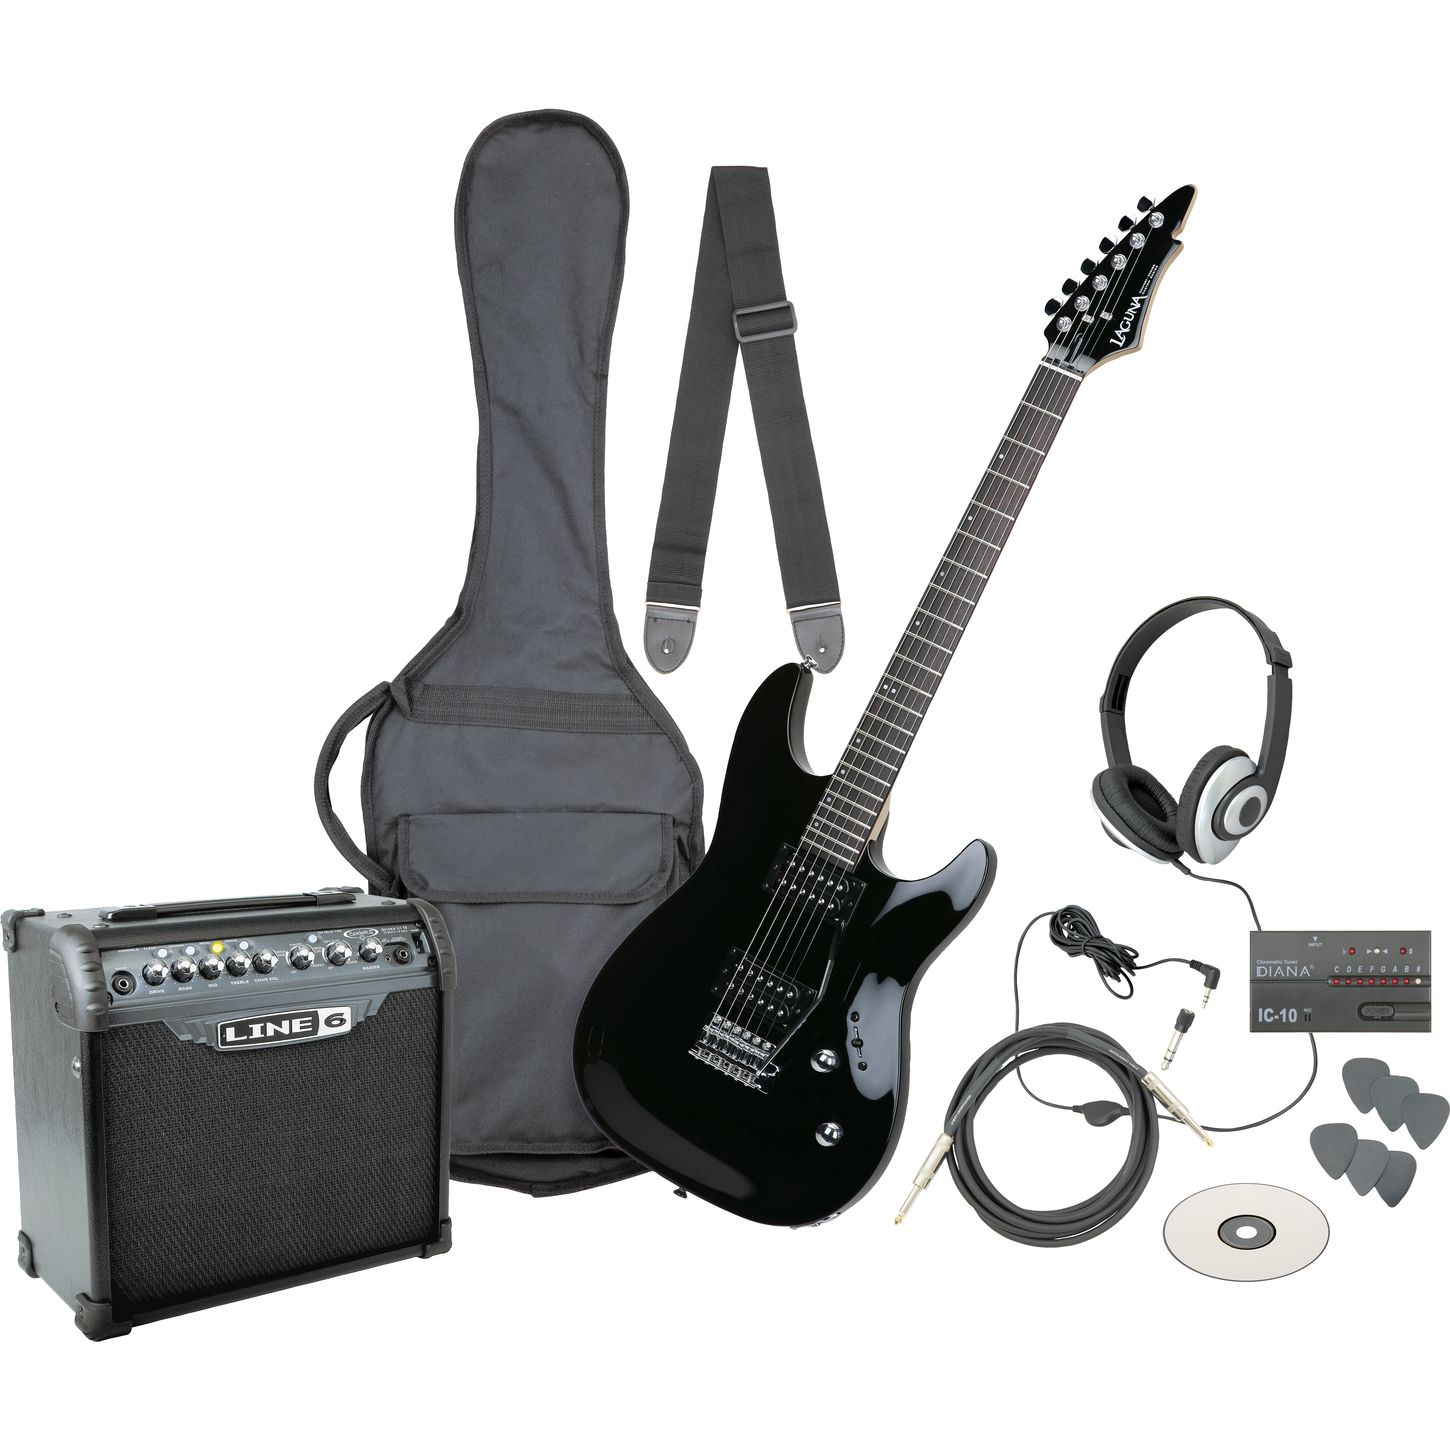 Rock Electric Guitar